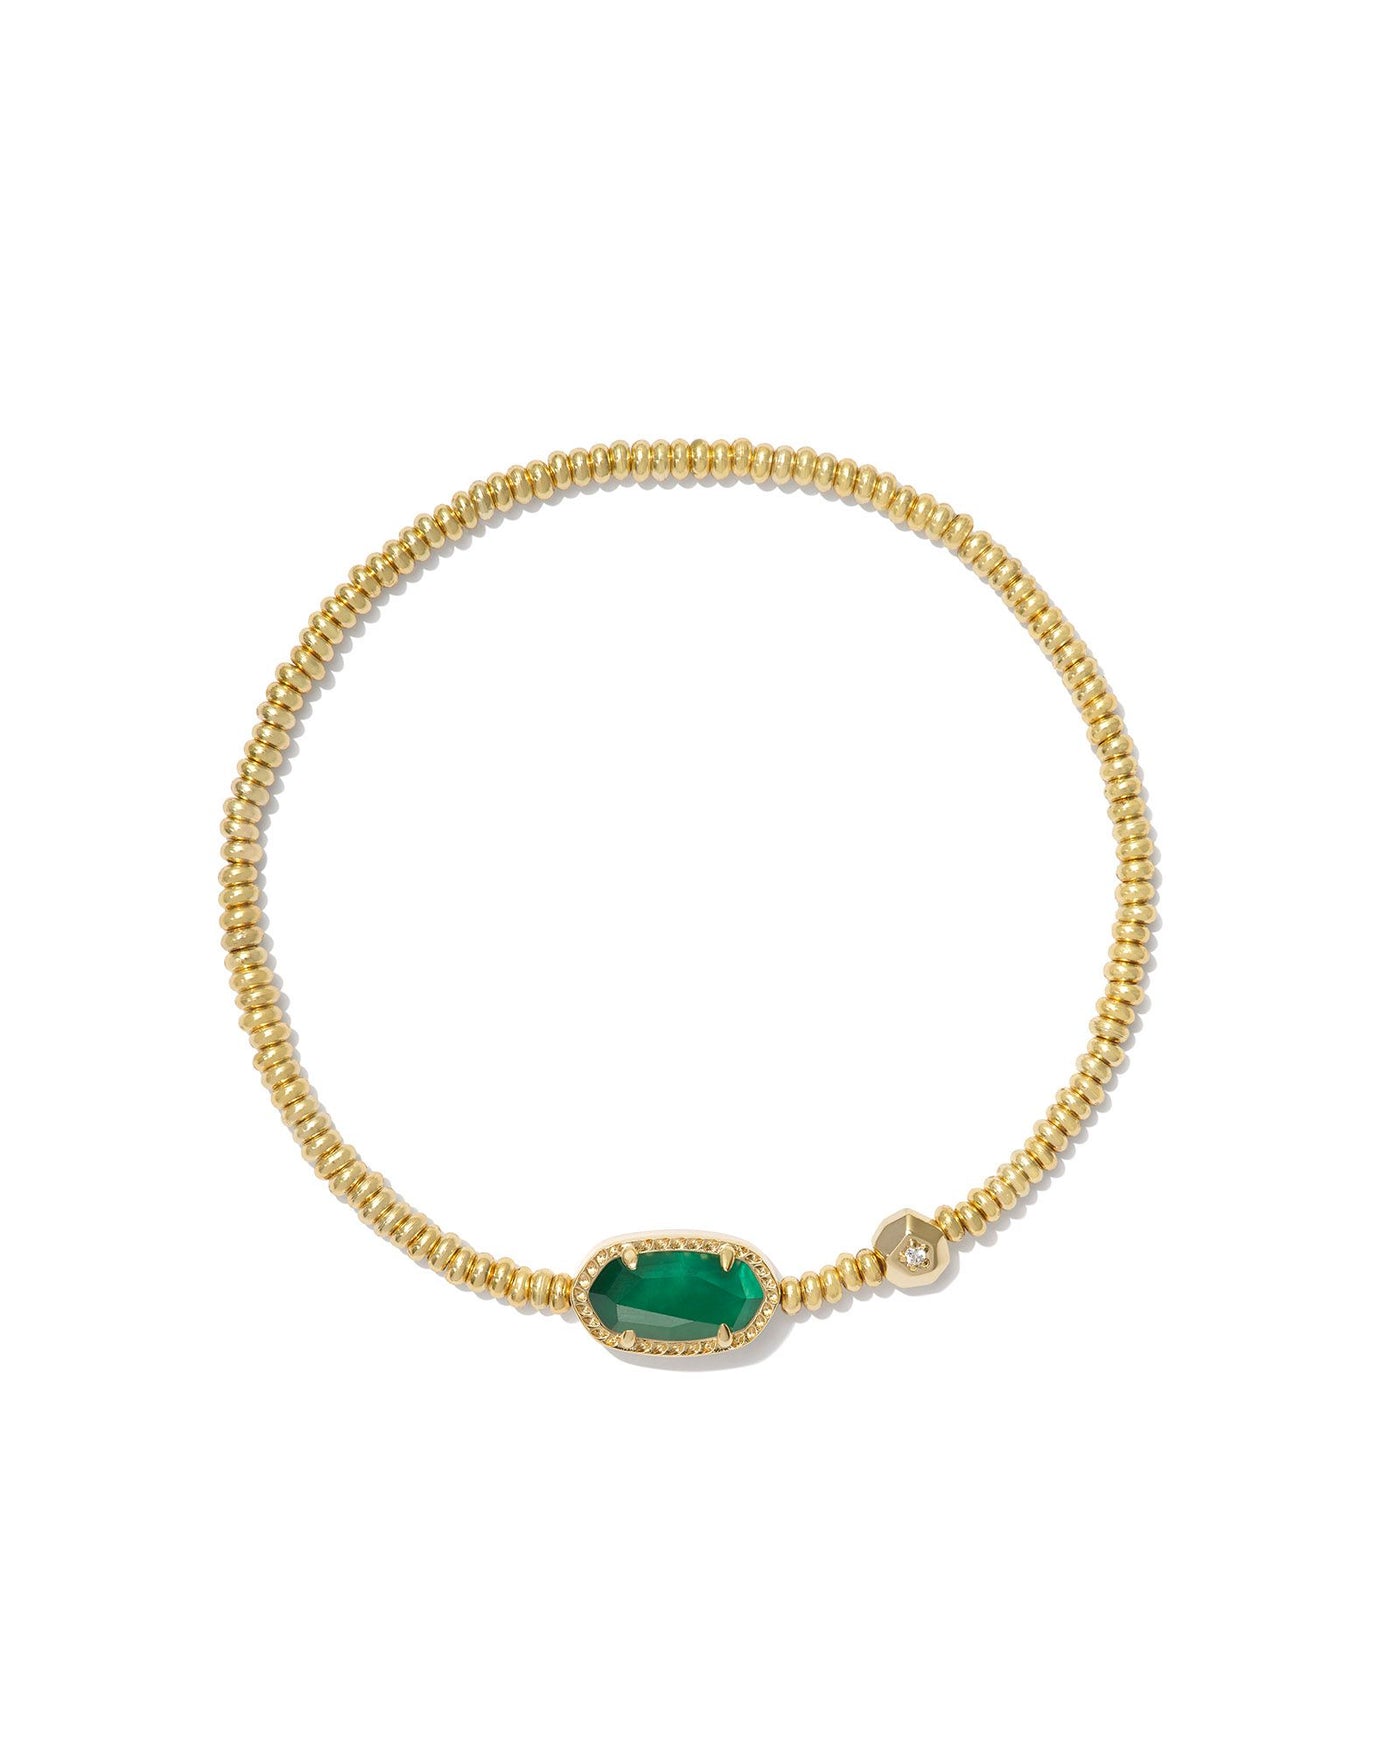 Kendra Scott Grayson Stretch Bracelet in Gold Emerald Illusion on white background.